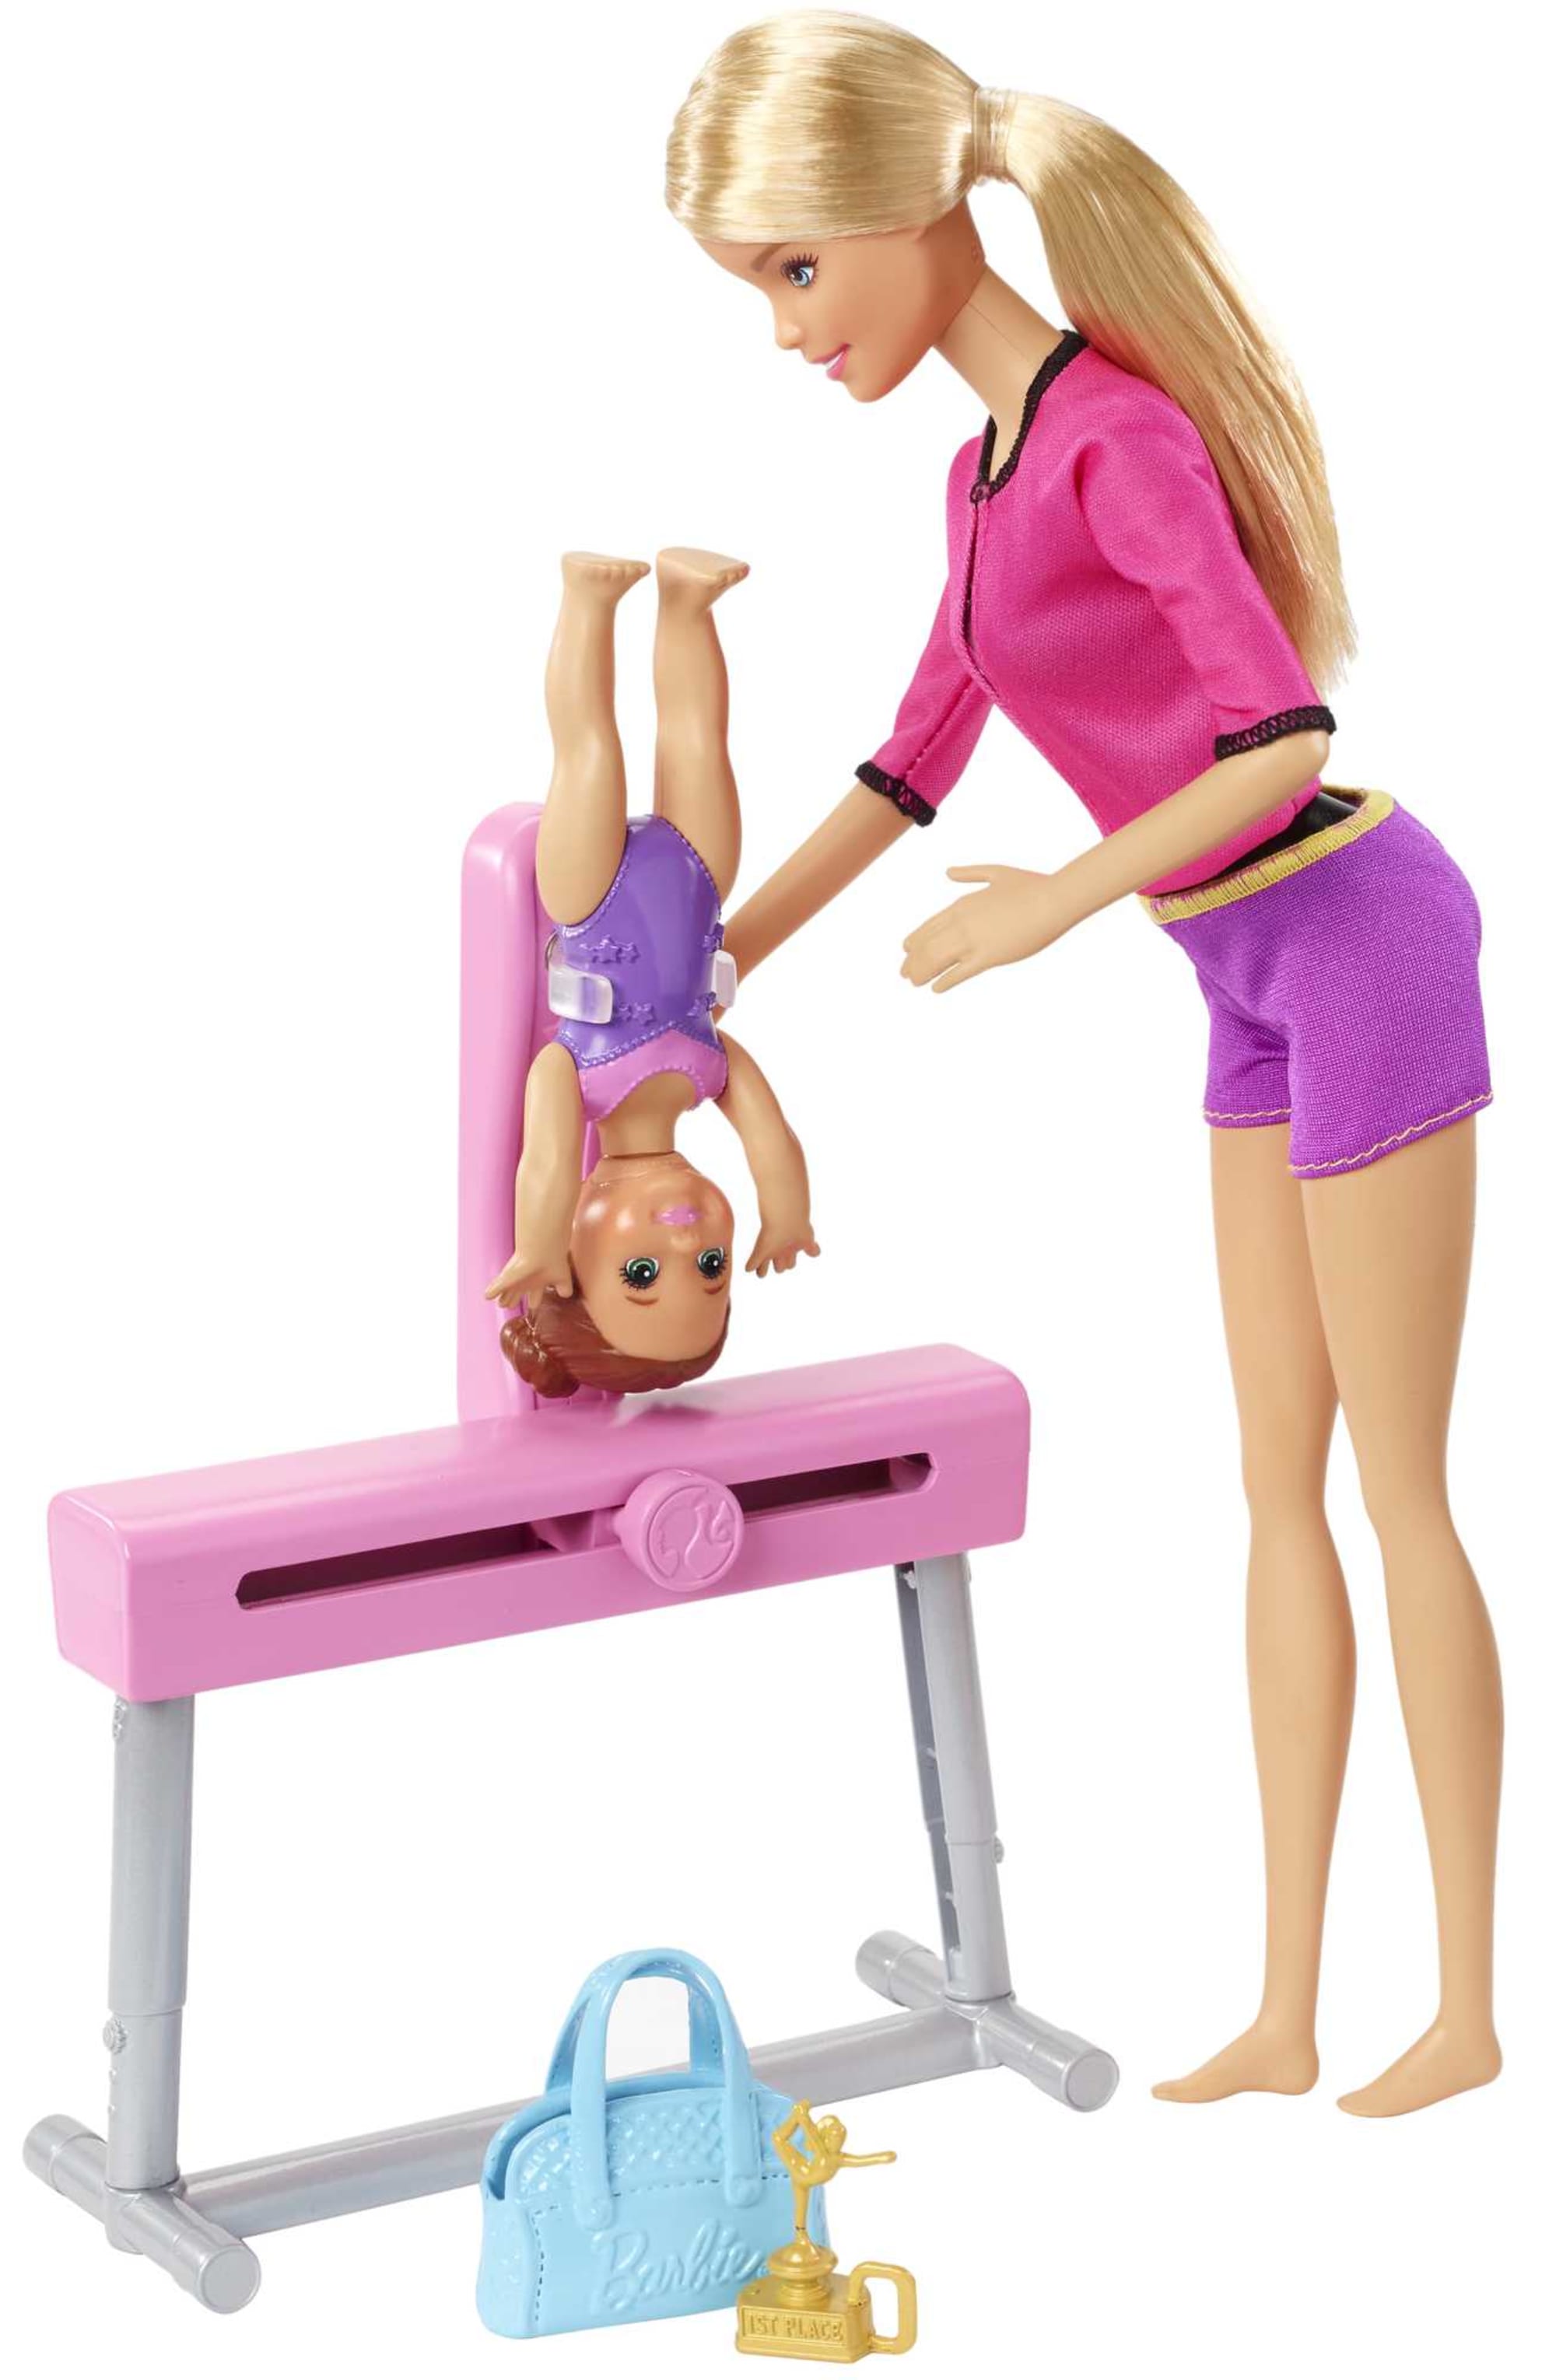 Barbie Gymnastics Coach Dolls & Playset | Mattel